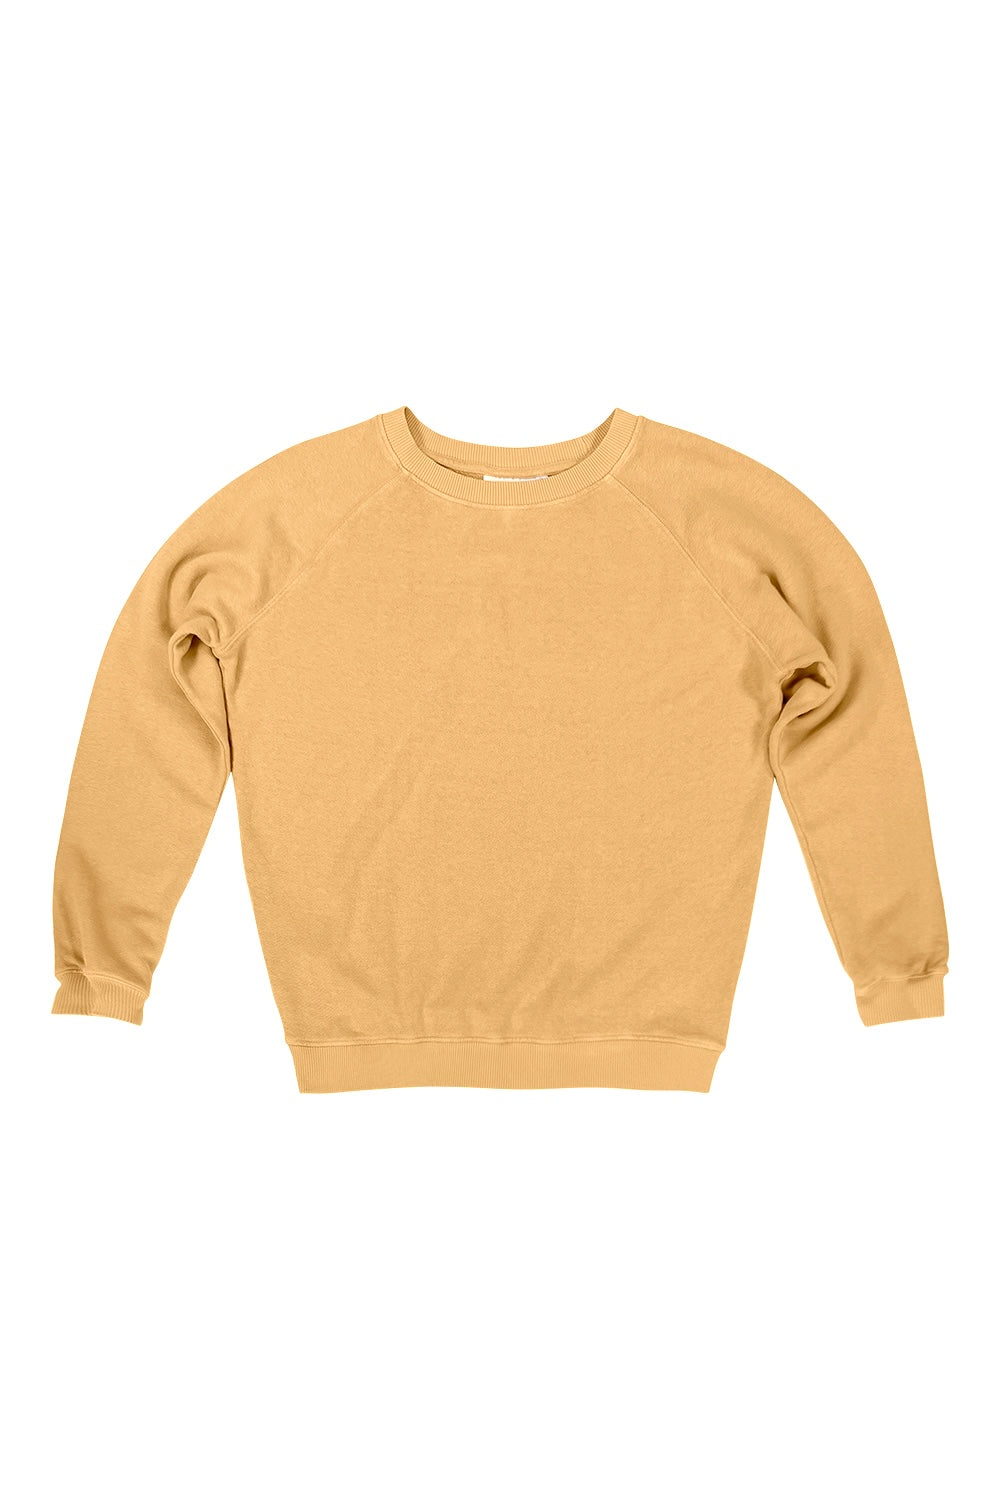 Bonfire Raglan Sweatshirt | Jungmaven Hemp Clothing & Accessories / Color: Oat Milk